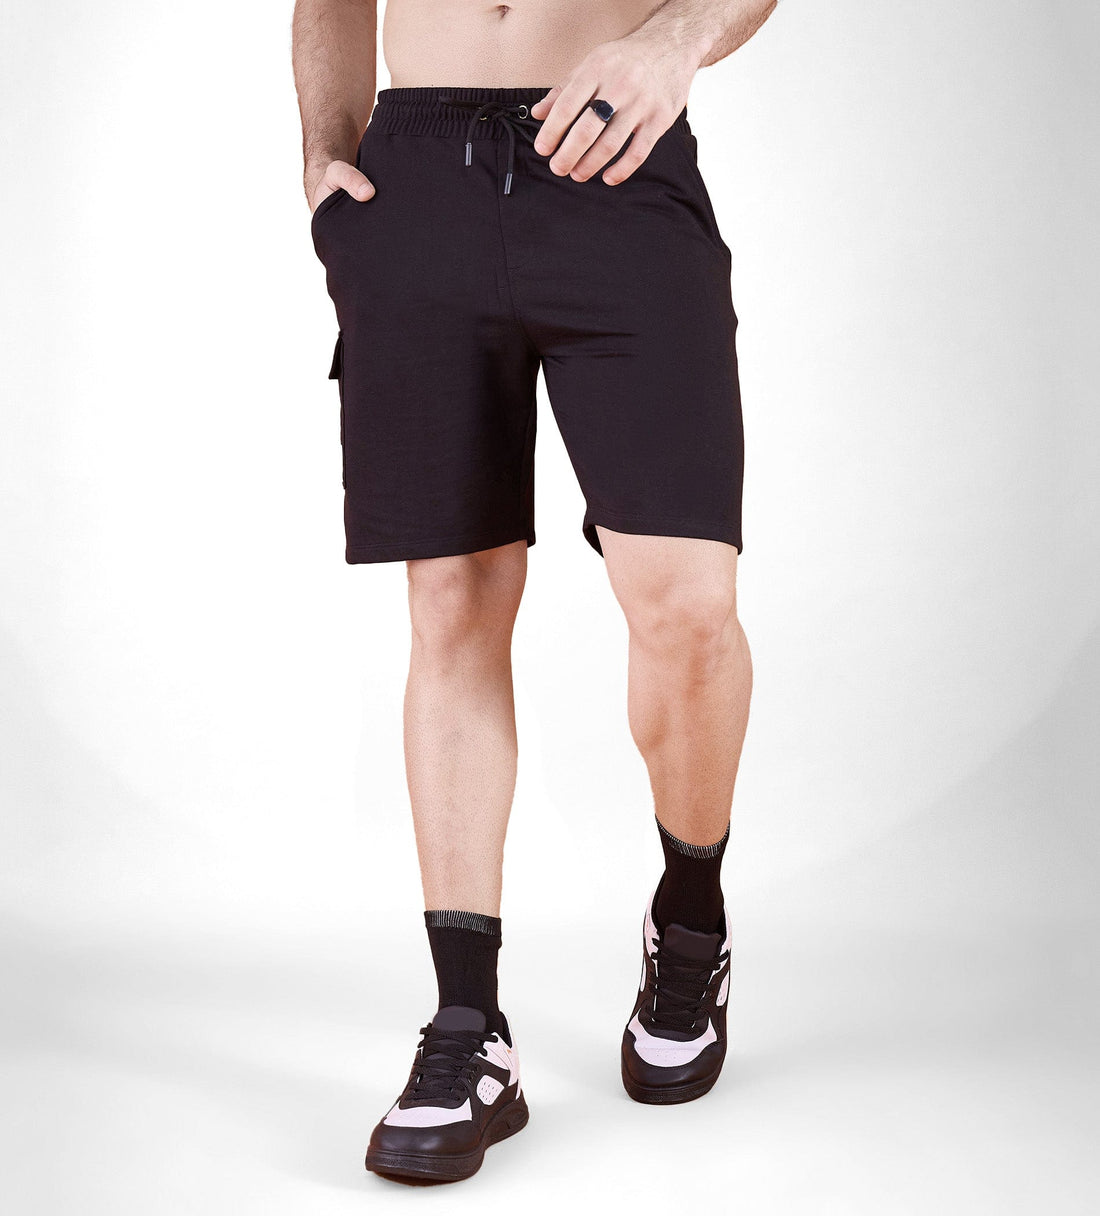 Shorts Shorts Black Bold Emblem Shorts For Men